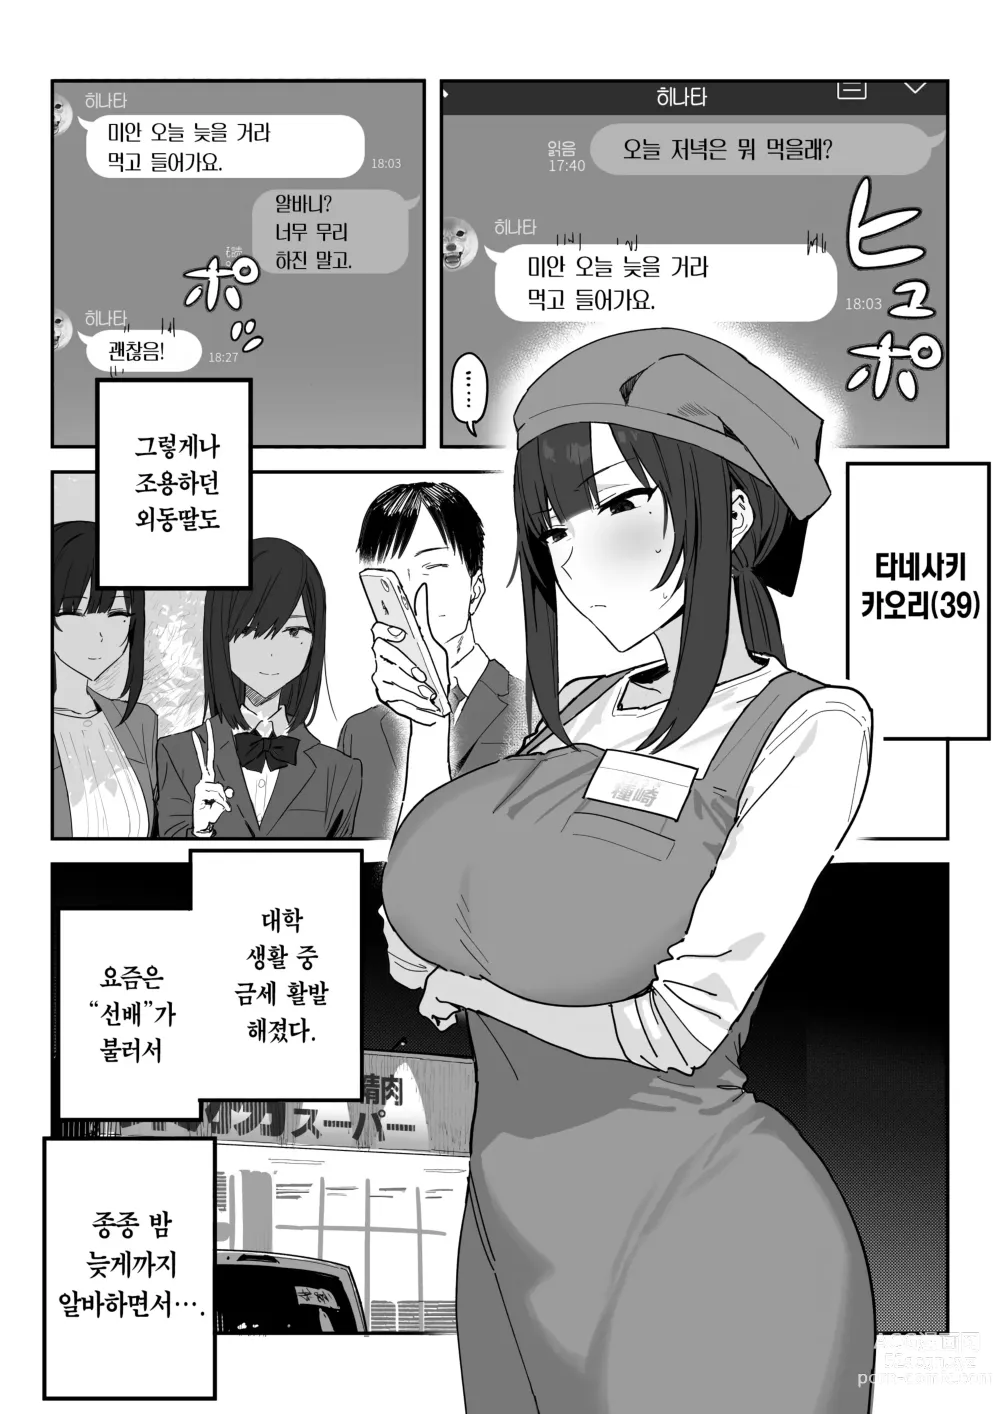 Page 2 of doujinshi 타네사키 카오리(39), 딸 대신 아마추어AV 데뷔